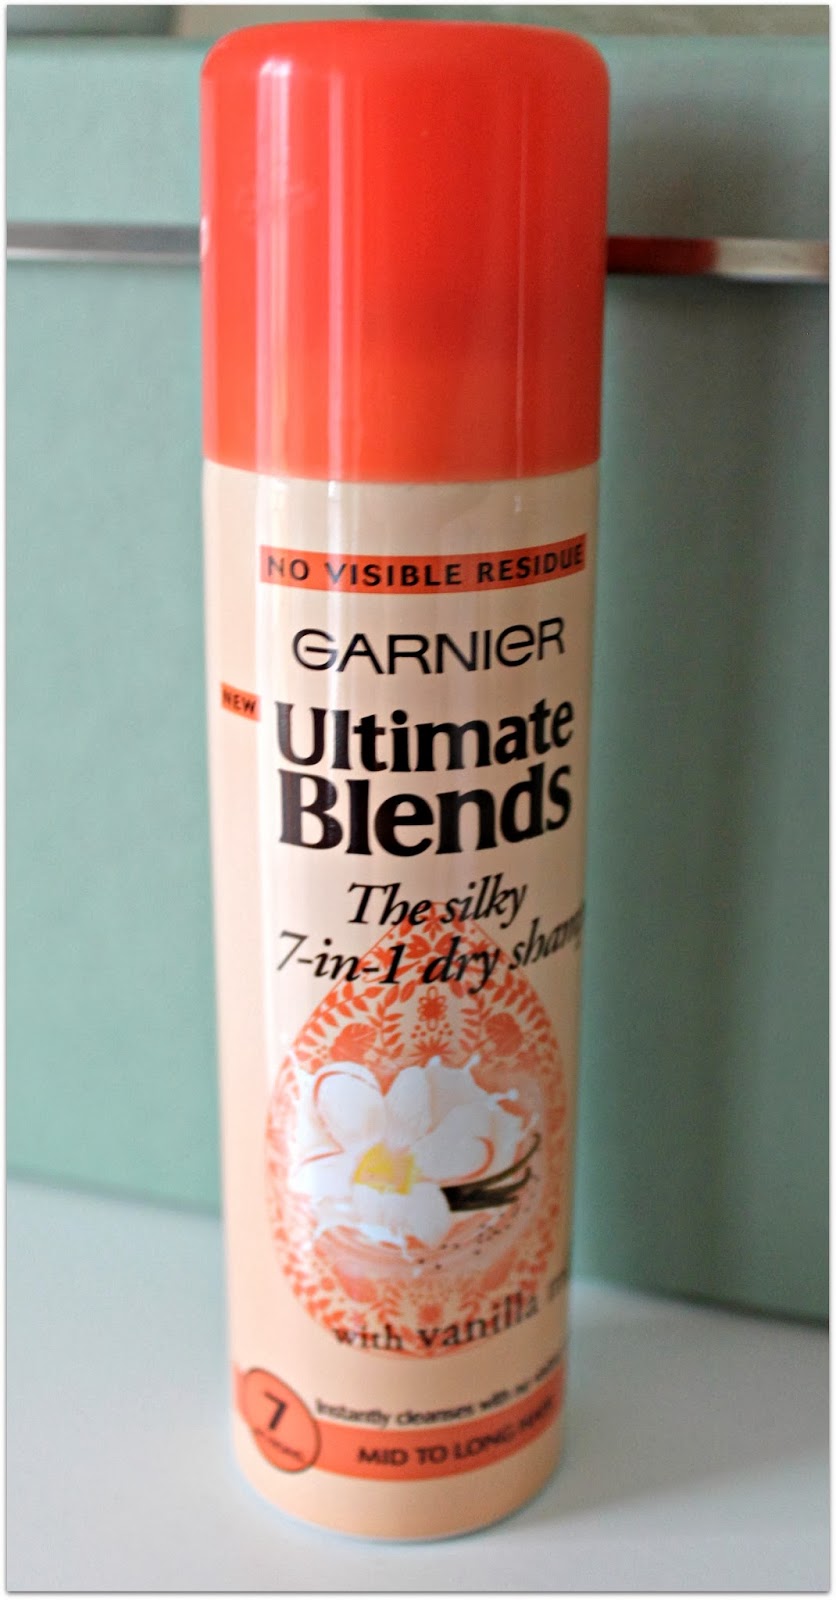 New! Garnier Ultimate Blends 7-in-1 Dry Shampoo